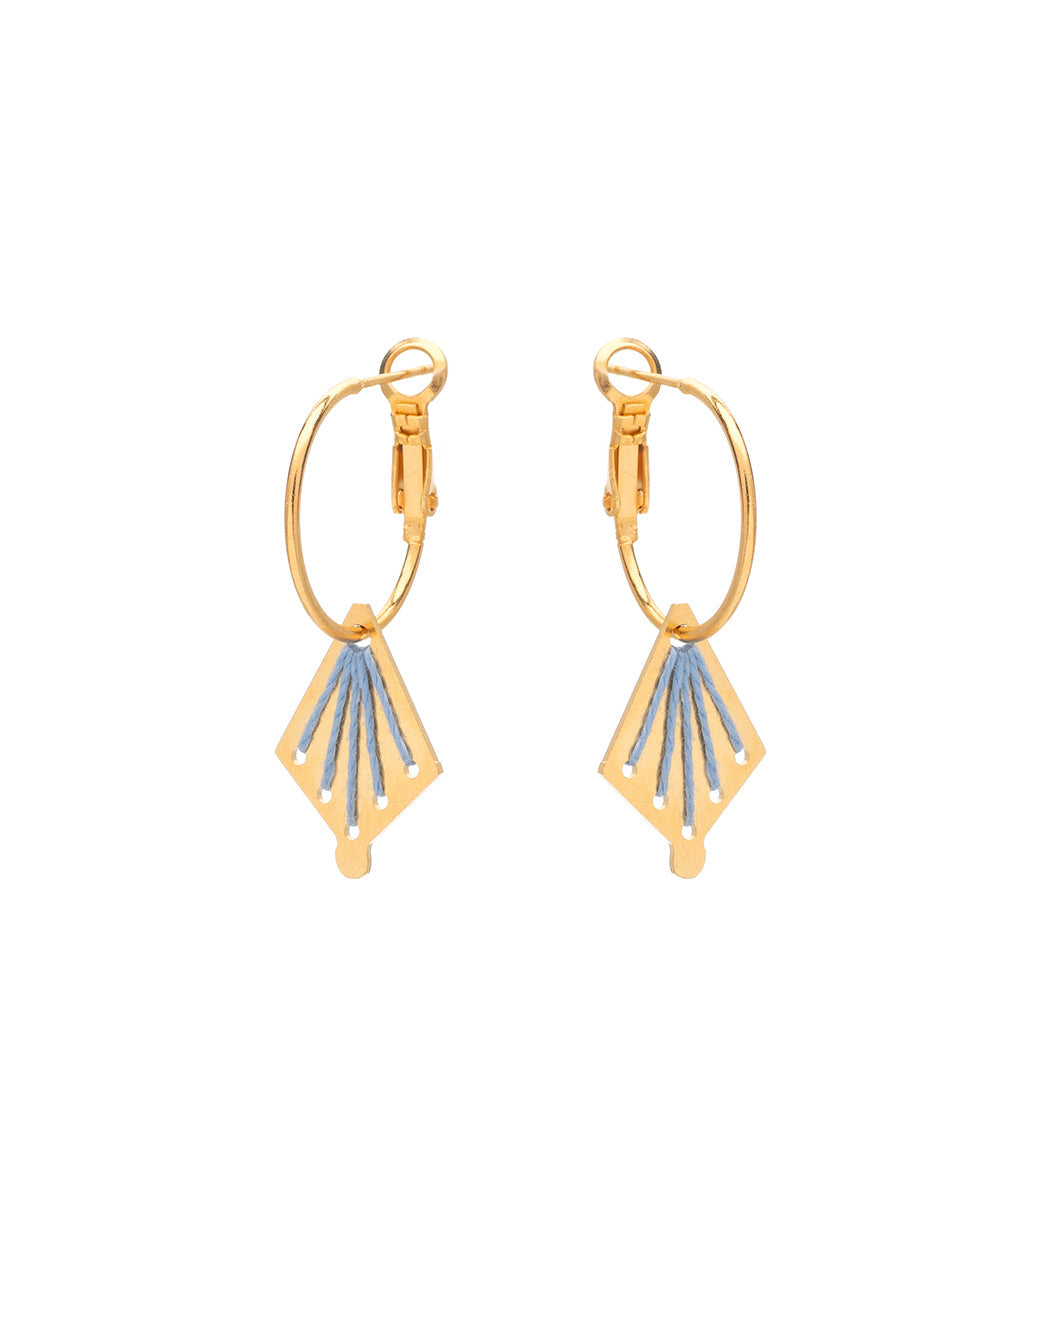 Kedima Dalia earrings